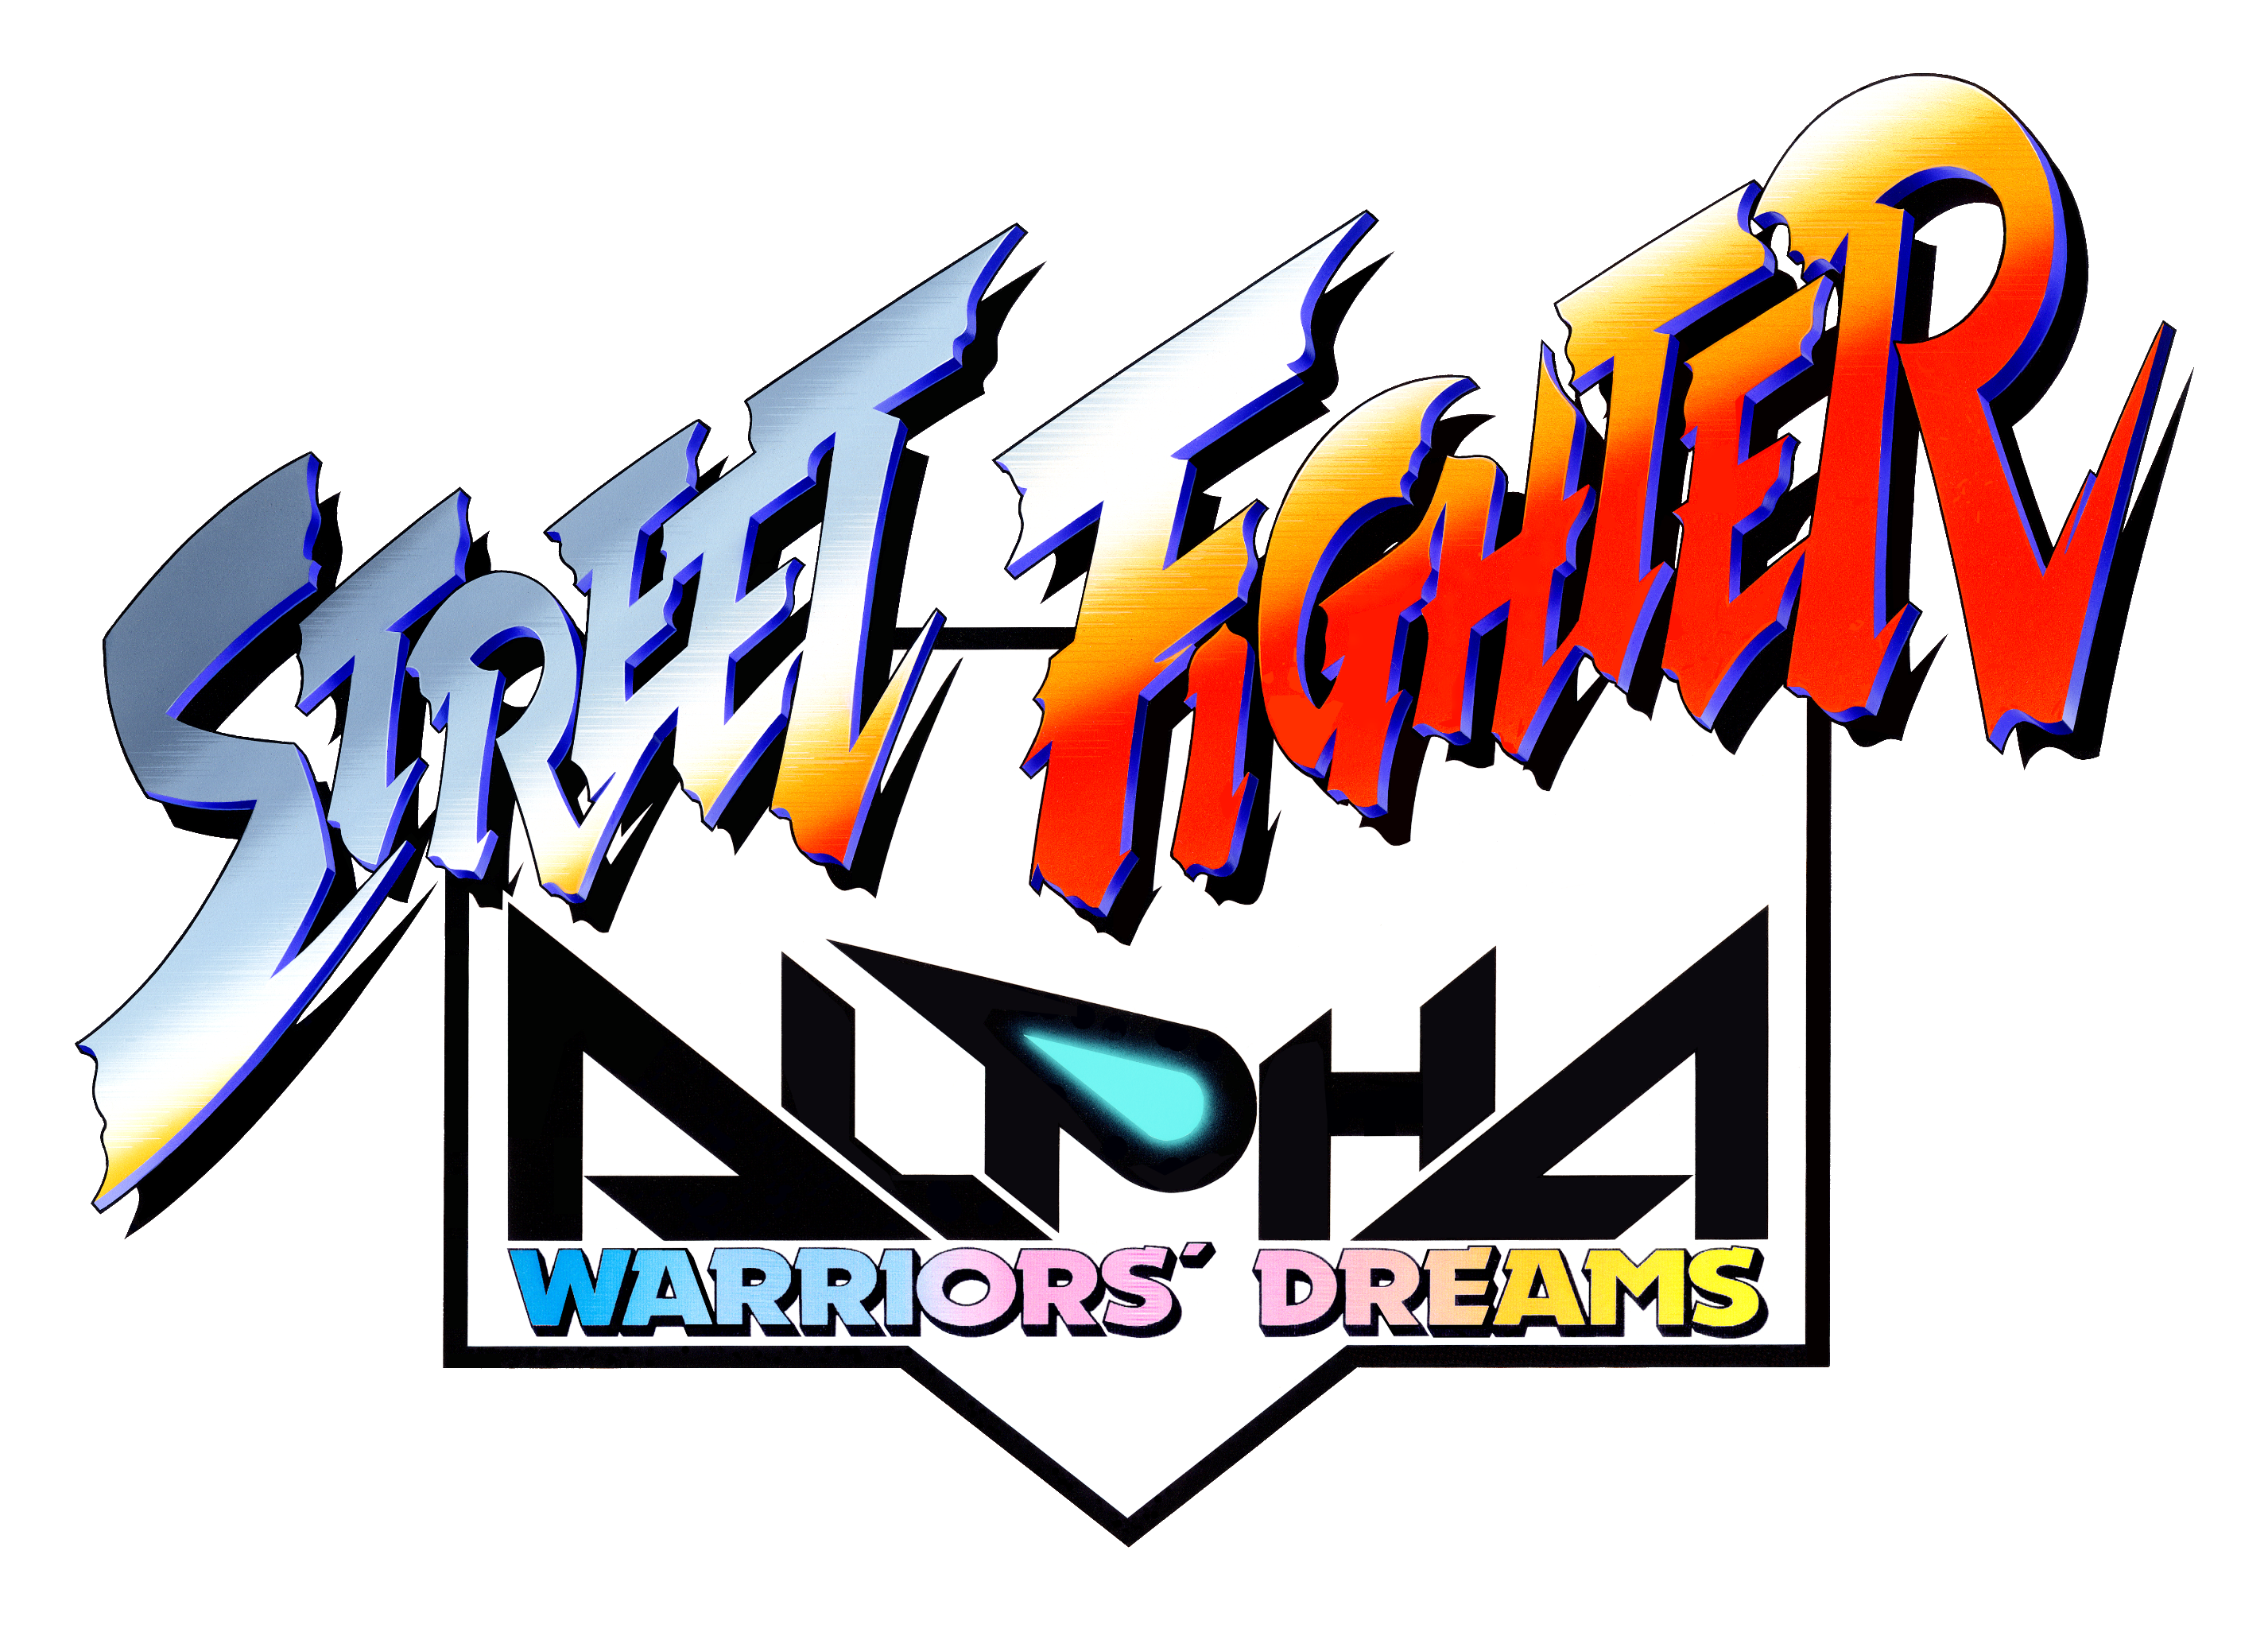 street fighter alpha 2 arcade